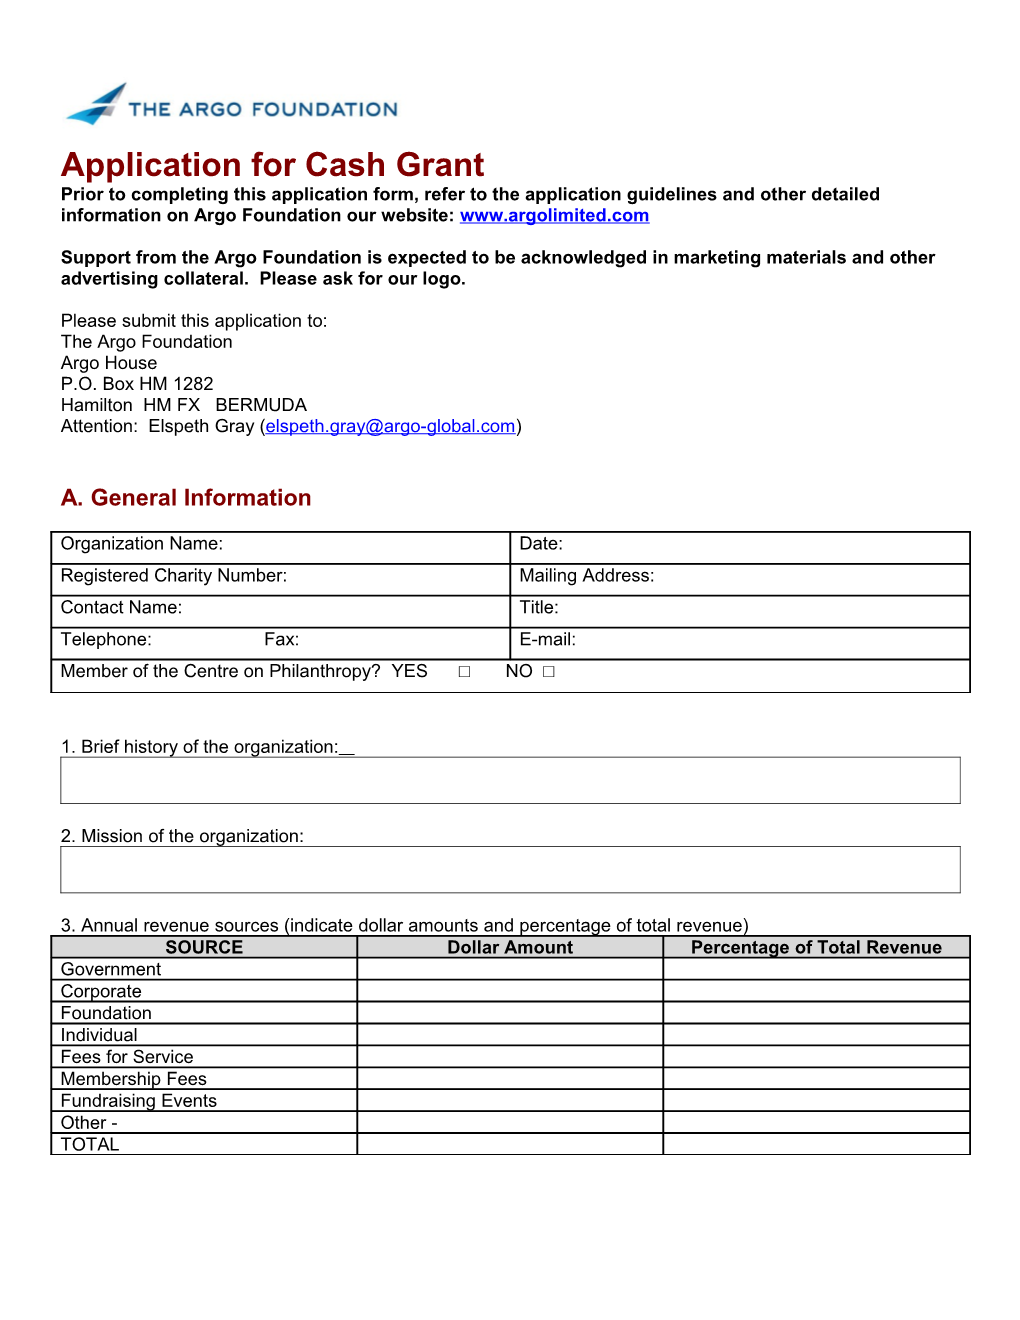 THE ARGO FOUNDATION Application for Cash Grant